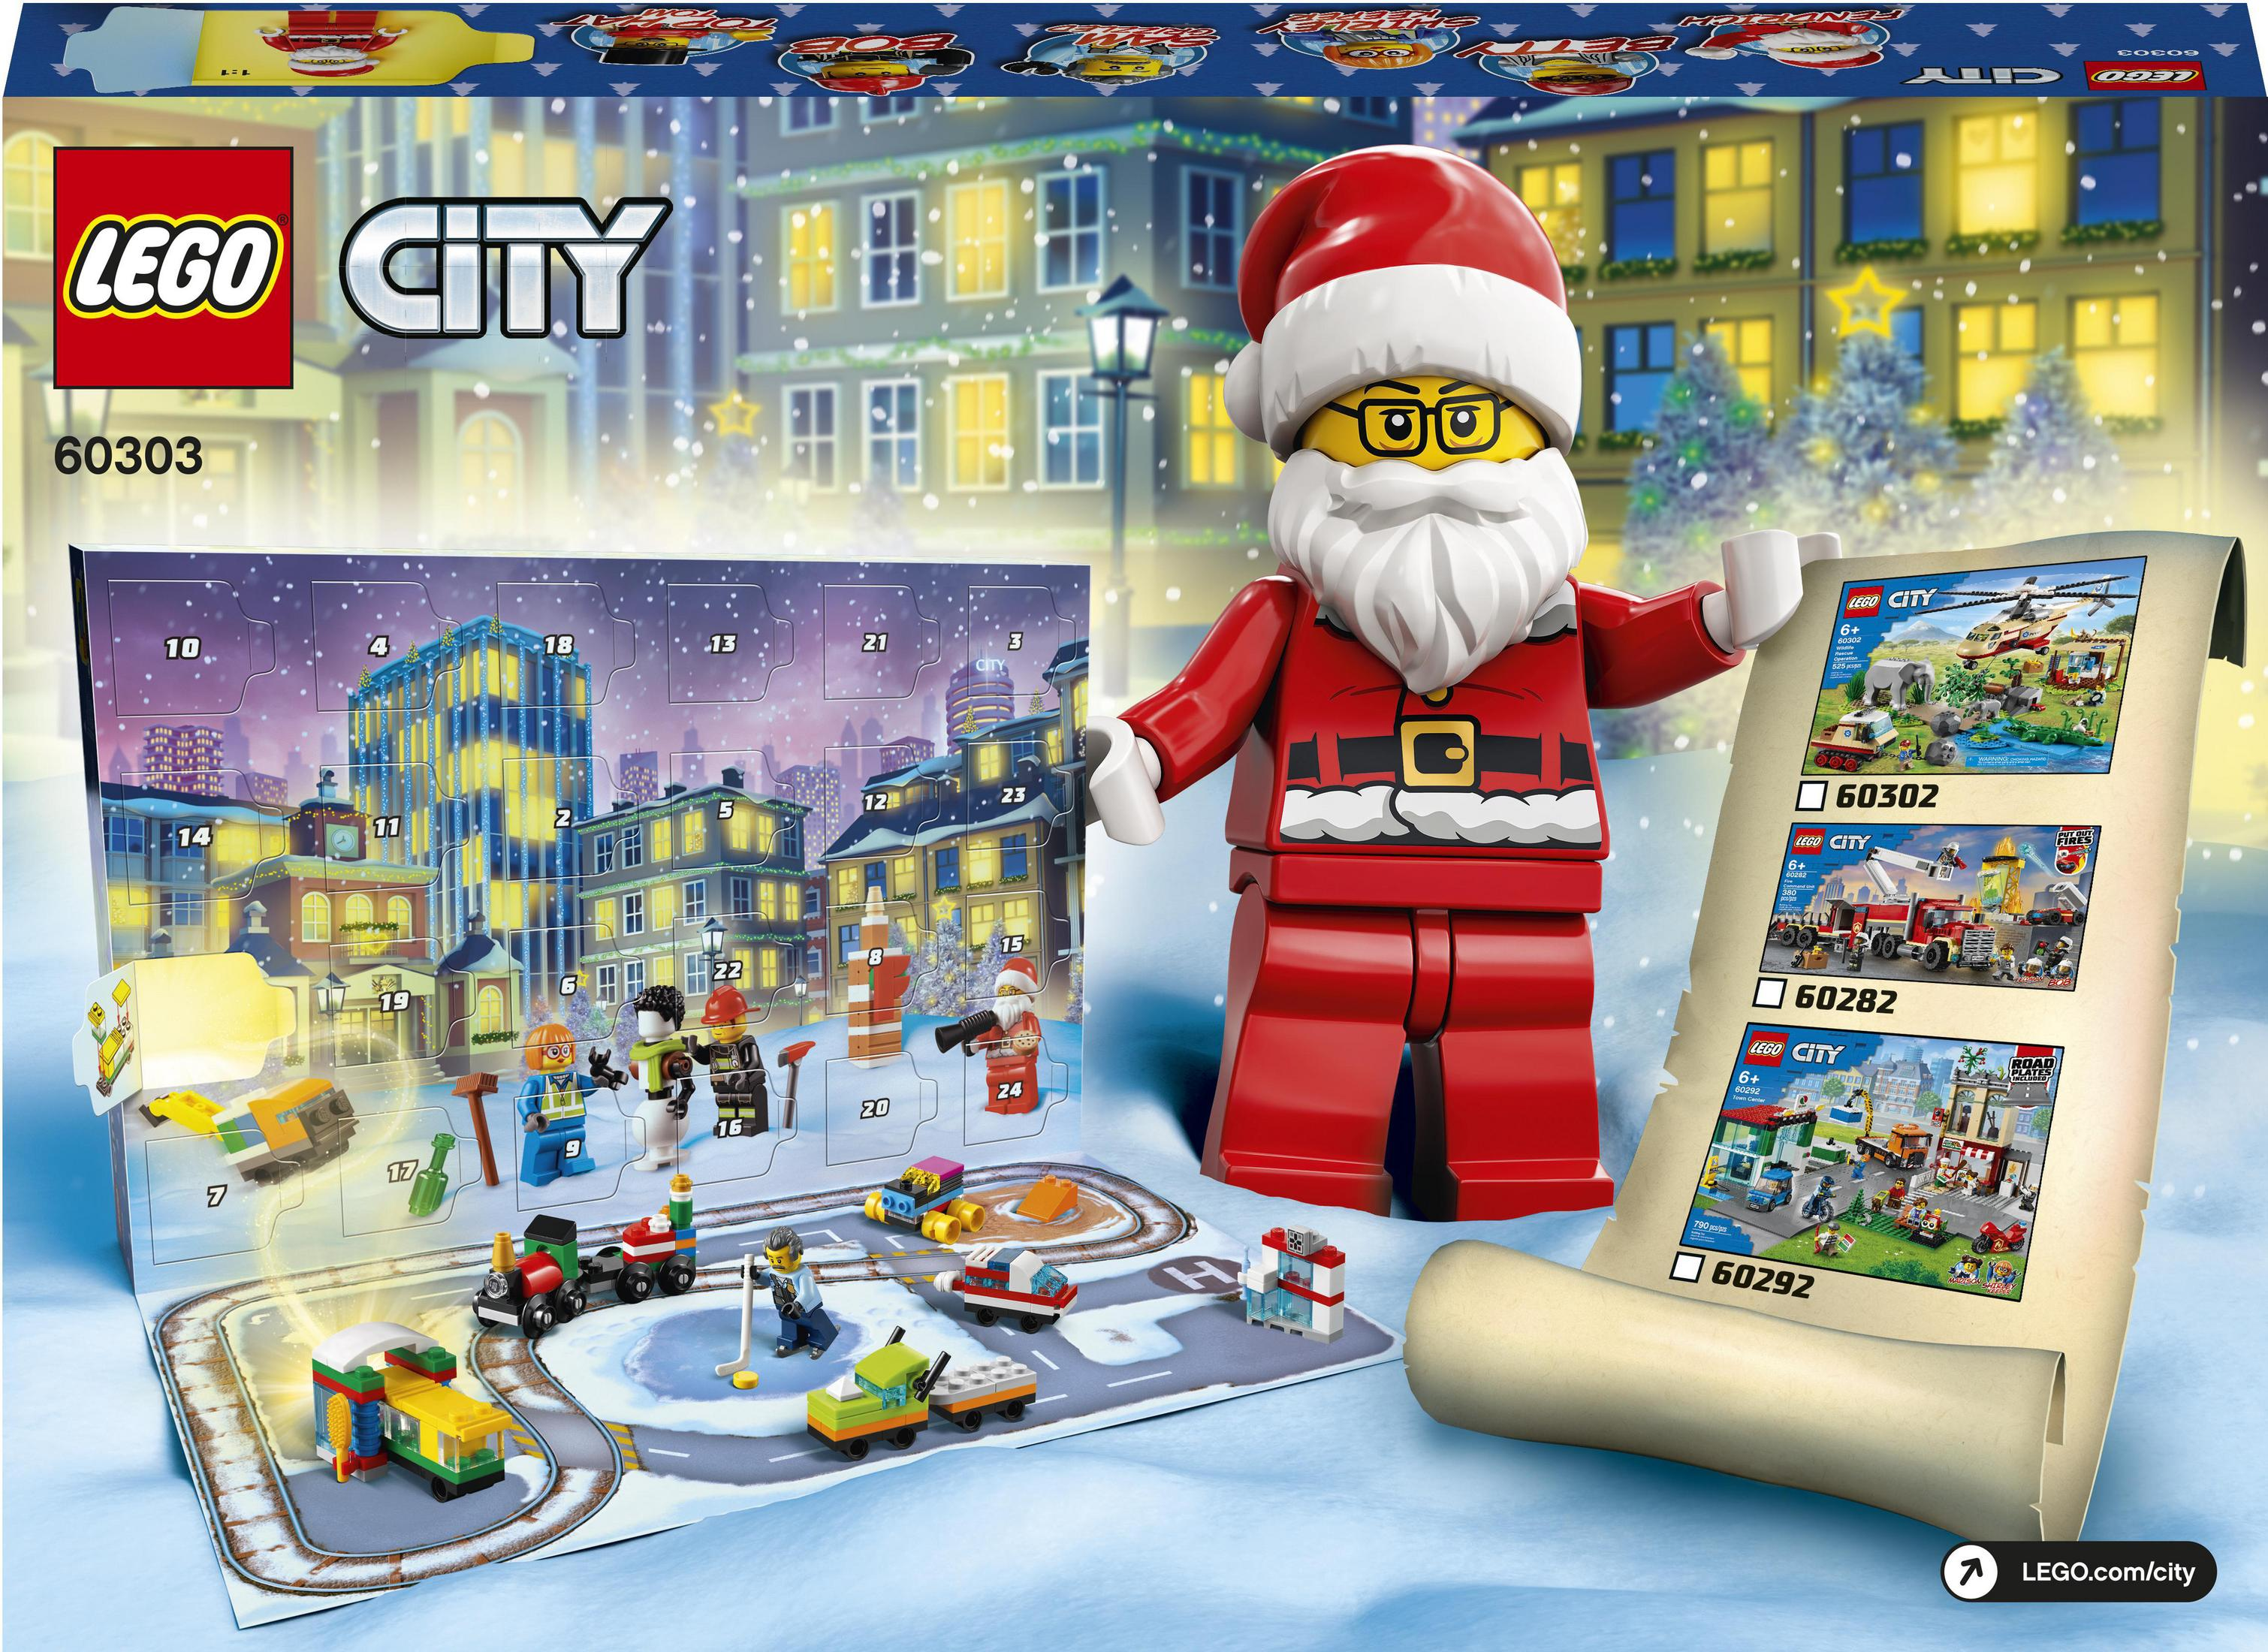 LEGO CITY Mehrfarbig ADVENTSKALENDER 60303 LEGO Adventskalender,